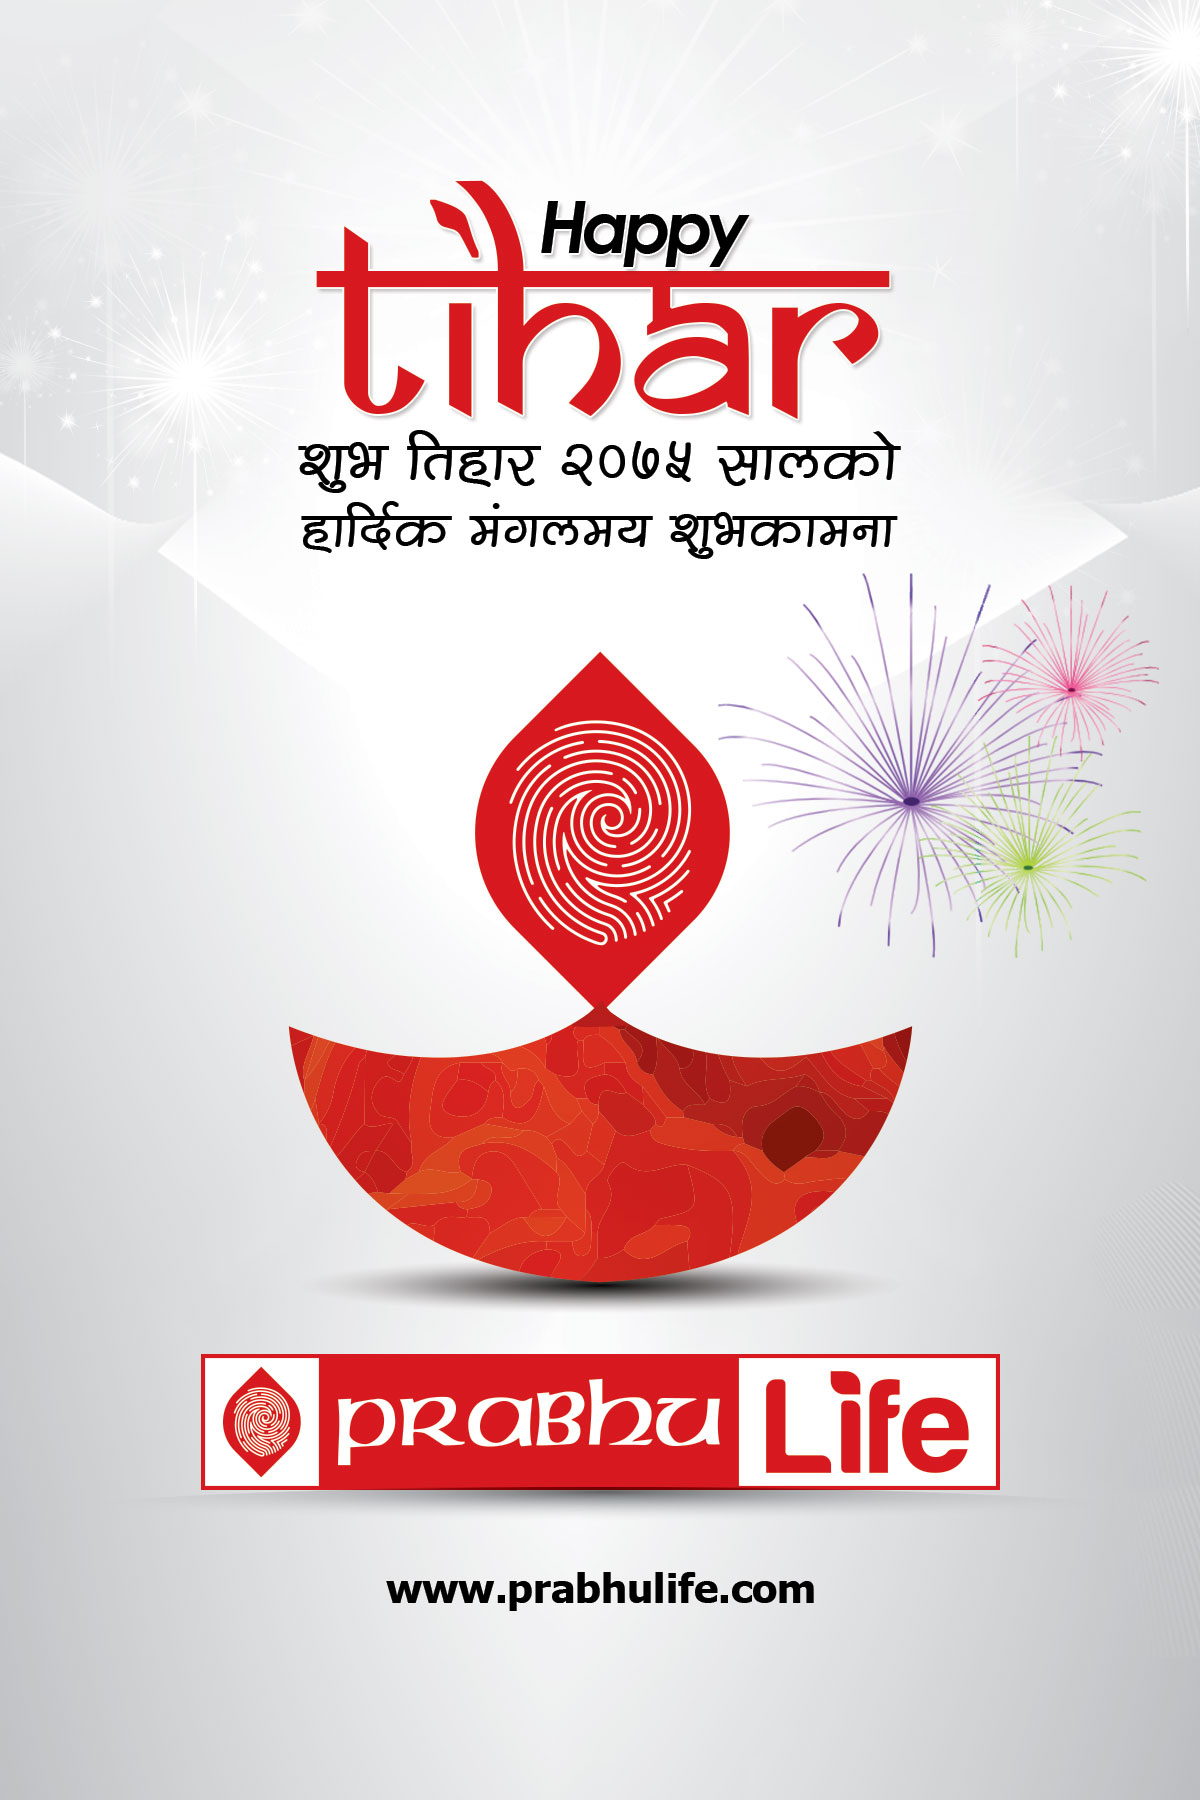 Prabhu Life Insurance Tihar Greeting 2075